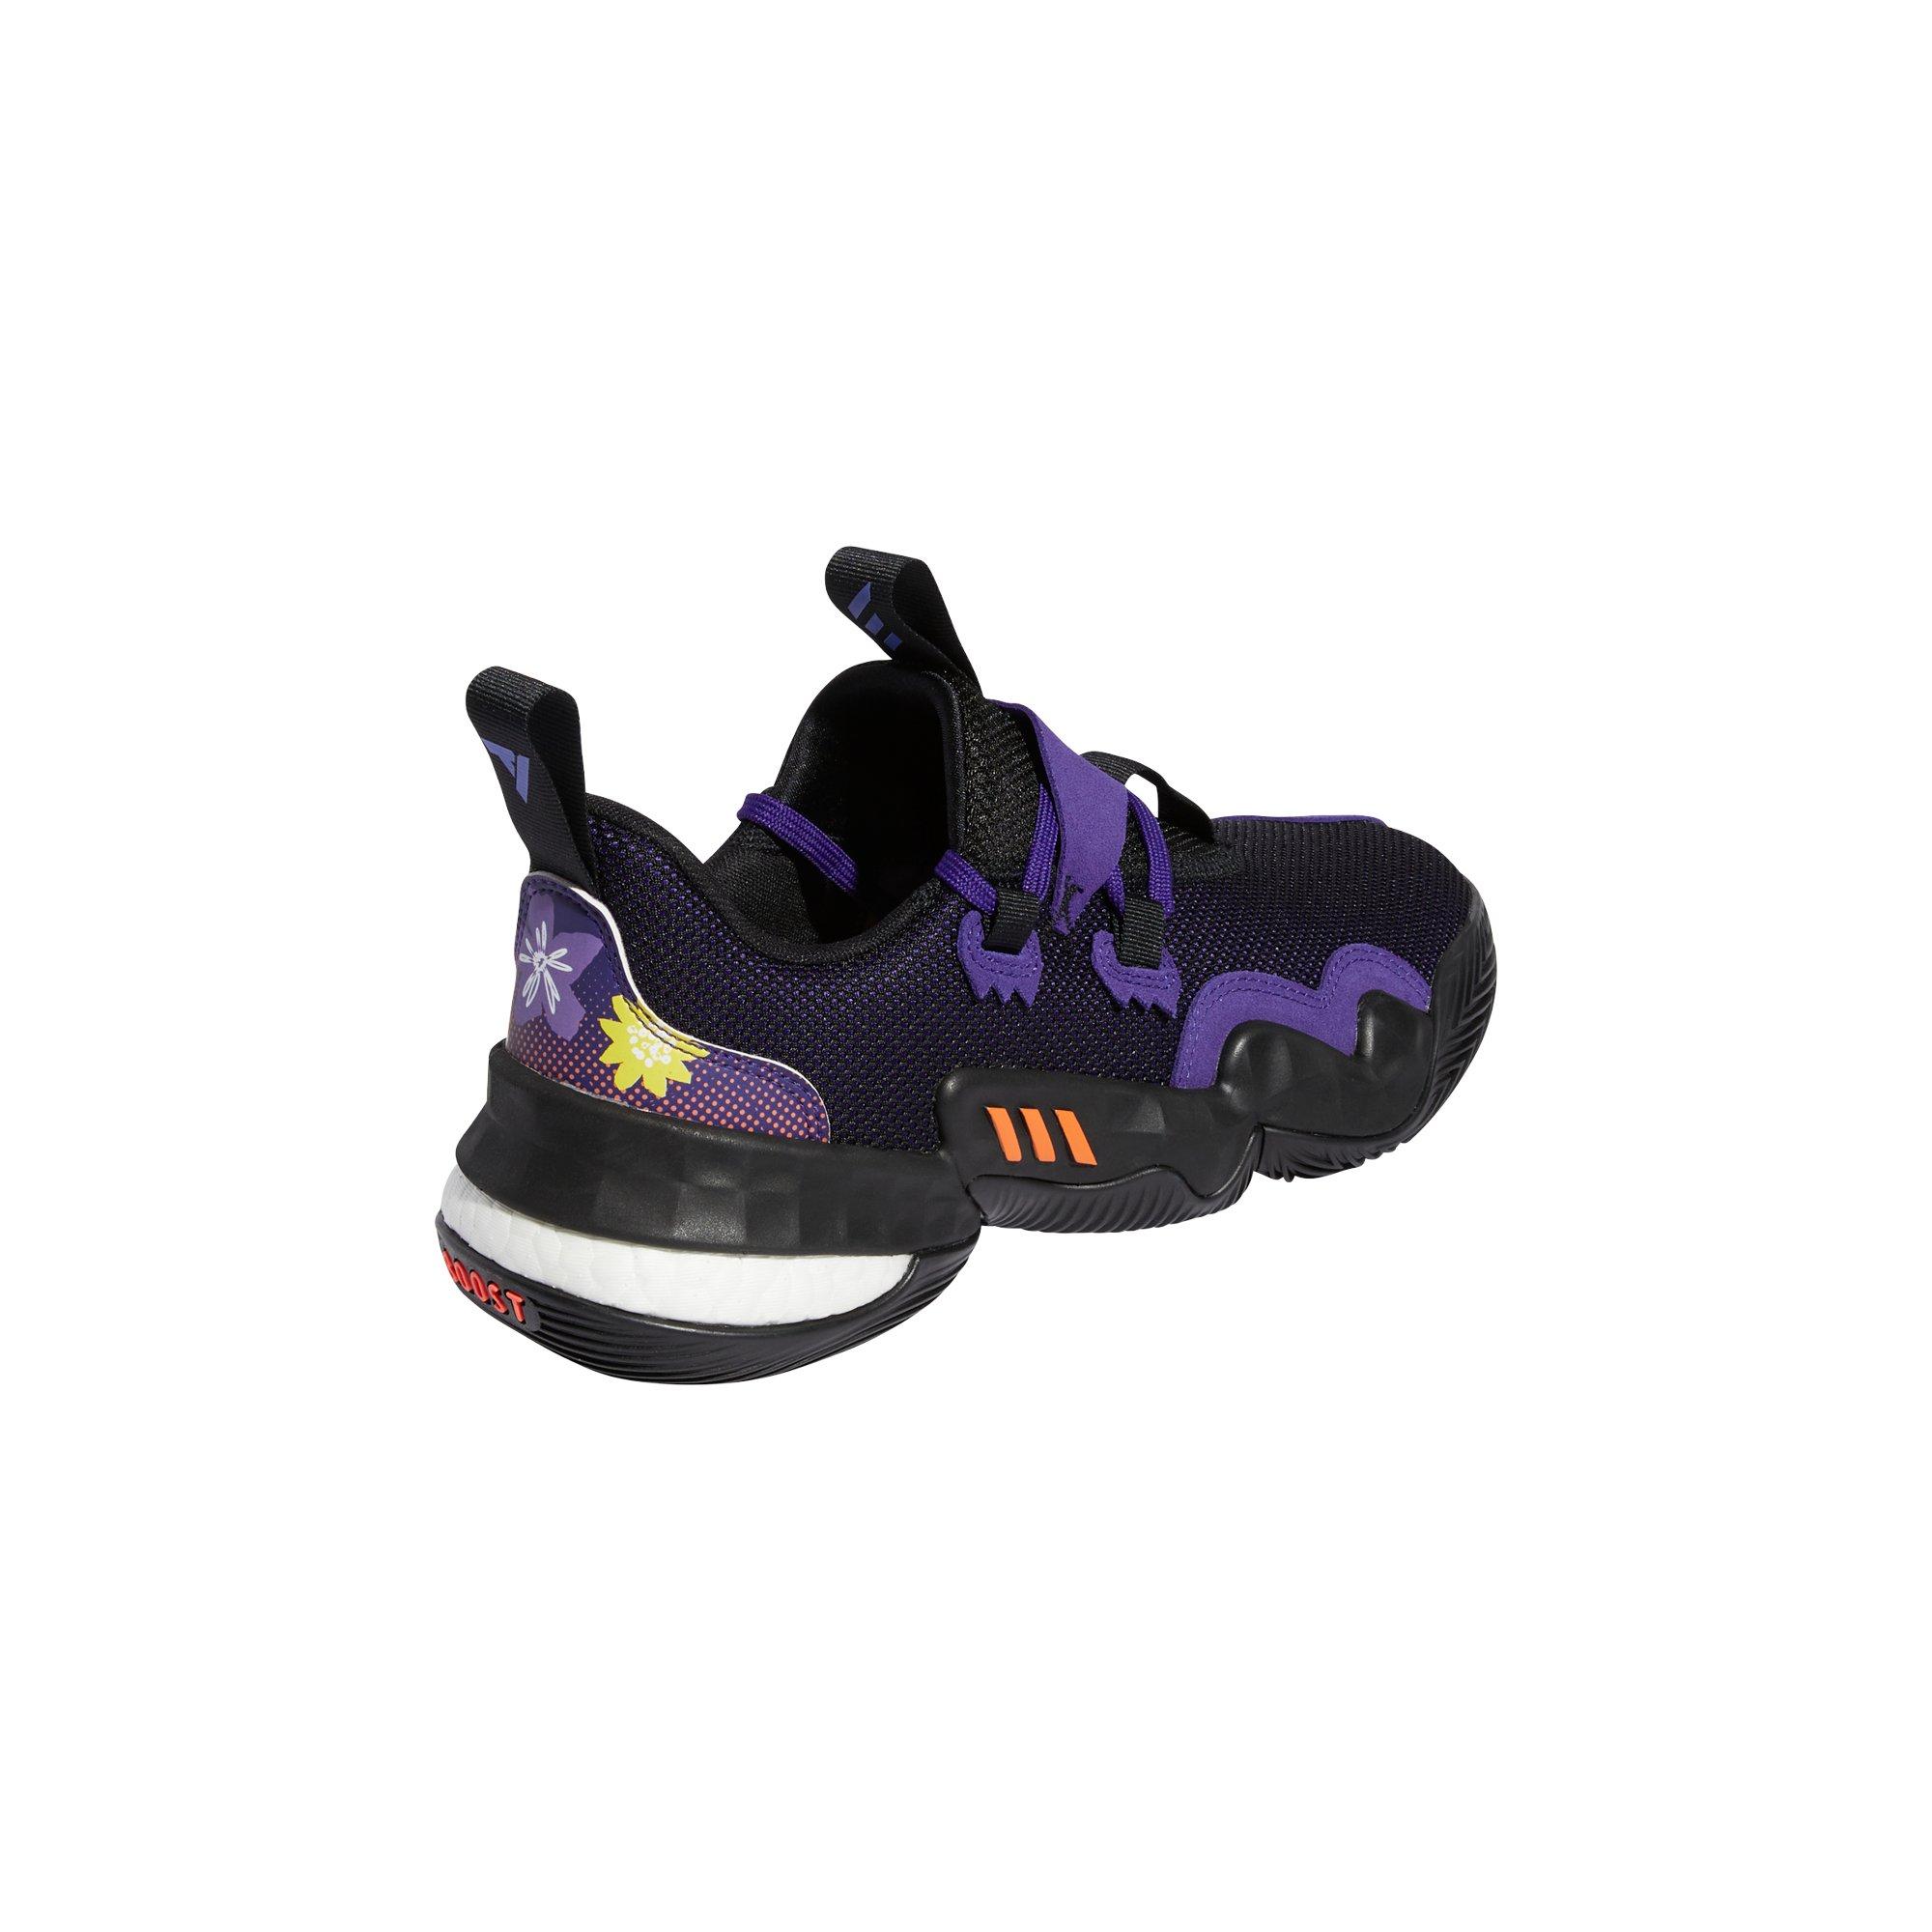 Adidas Trae Young 2.0 Basketball Shoes, Men's, Purple/Navy/Orange